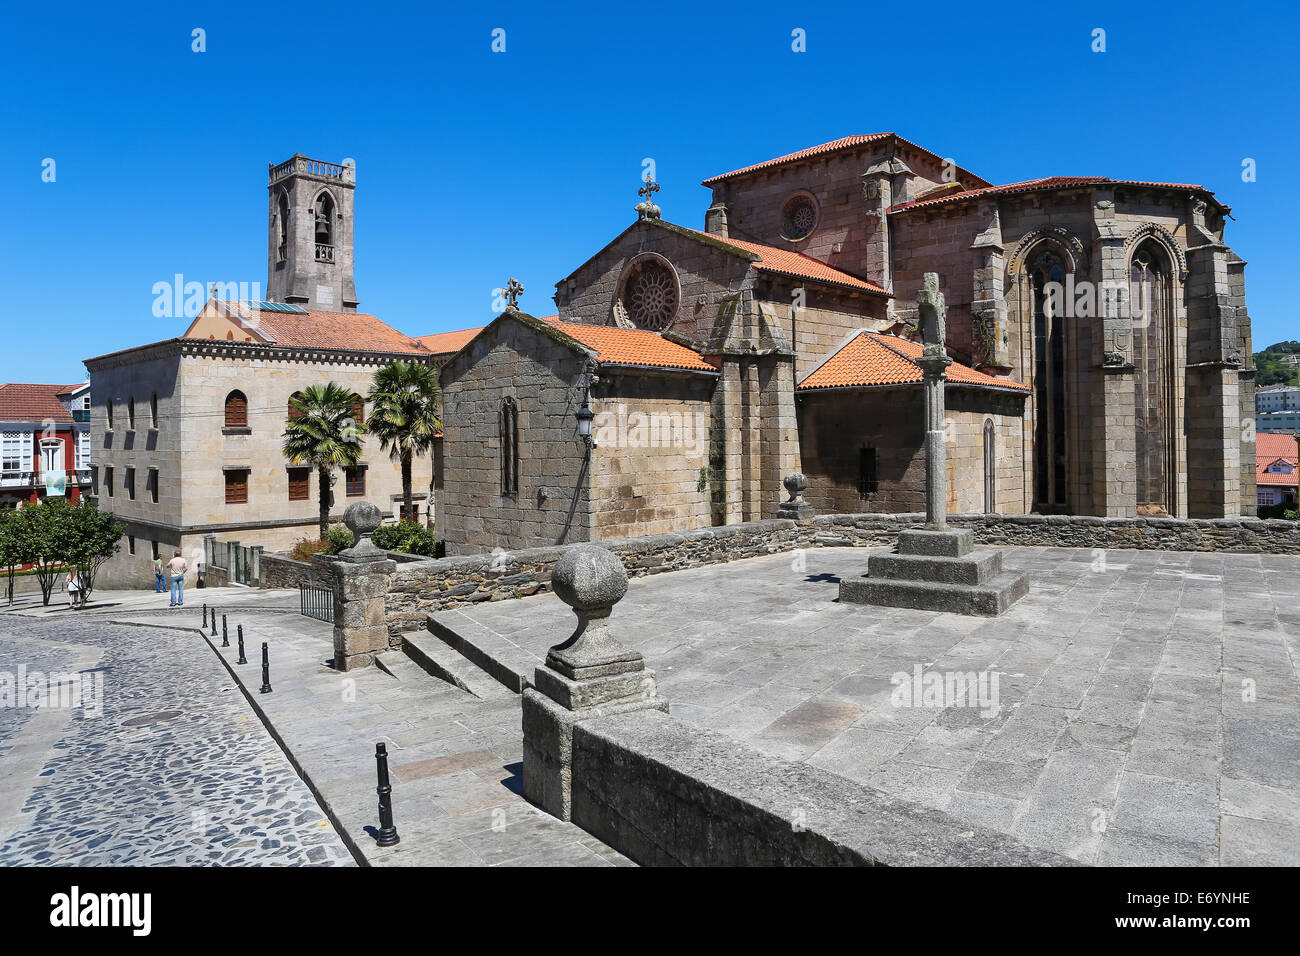 BETANZOS, SPAIN - JULY 30, 2014: Igrexa de San Francisco or Church of Saint Francis in the historic town Betanzos, Galicia, Spai Stock Photo